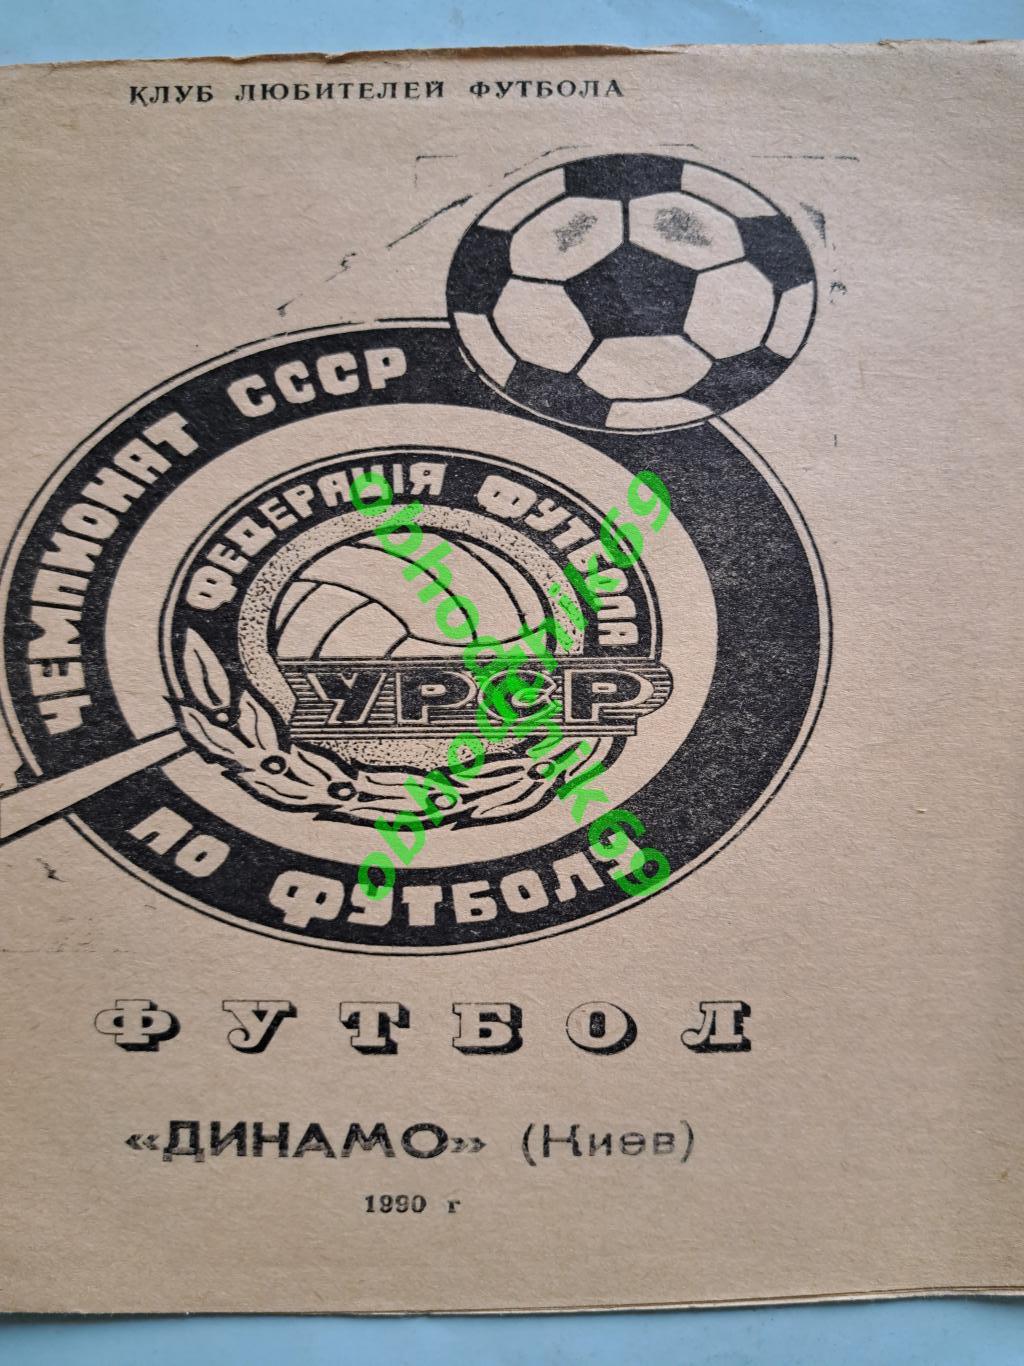 Футбол календарь Динамо Киев Клуб любителейфутбола 1990